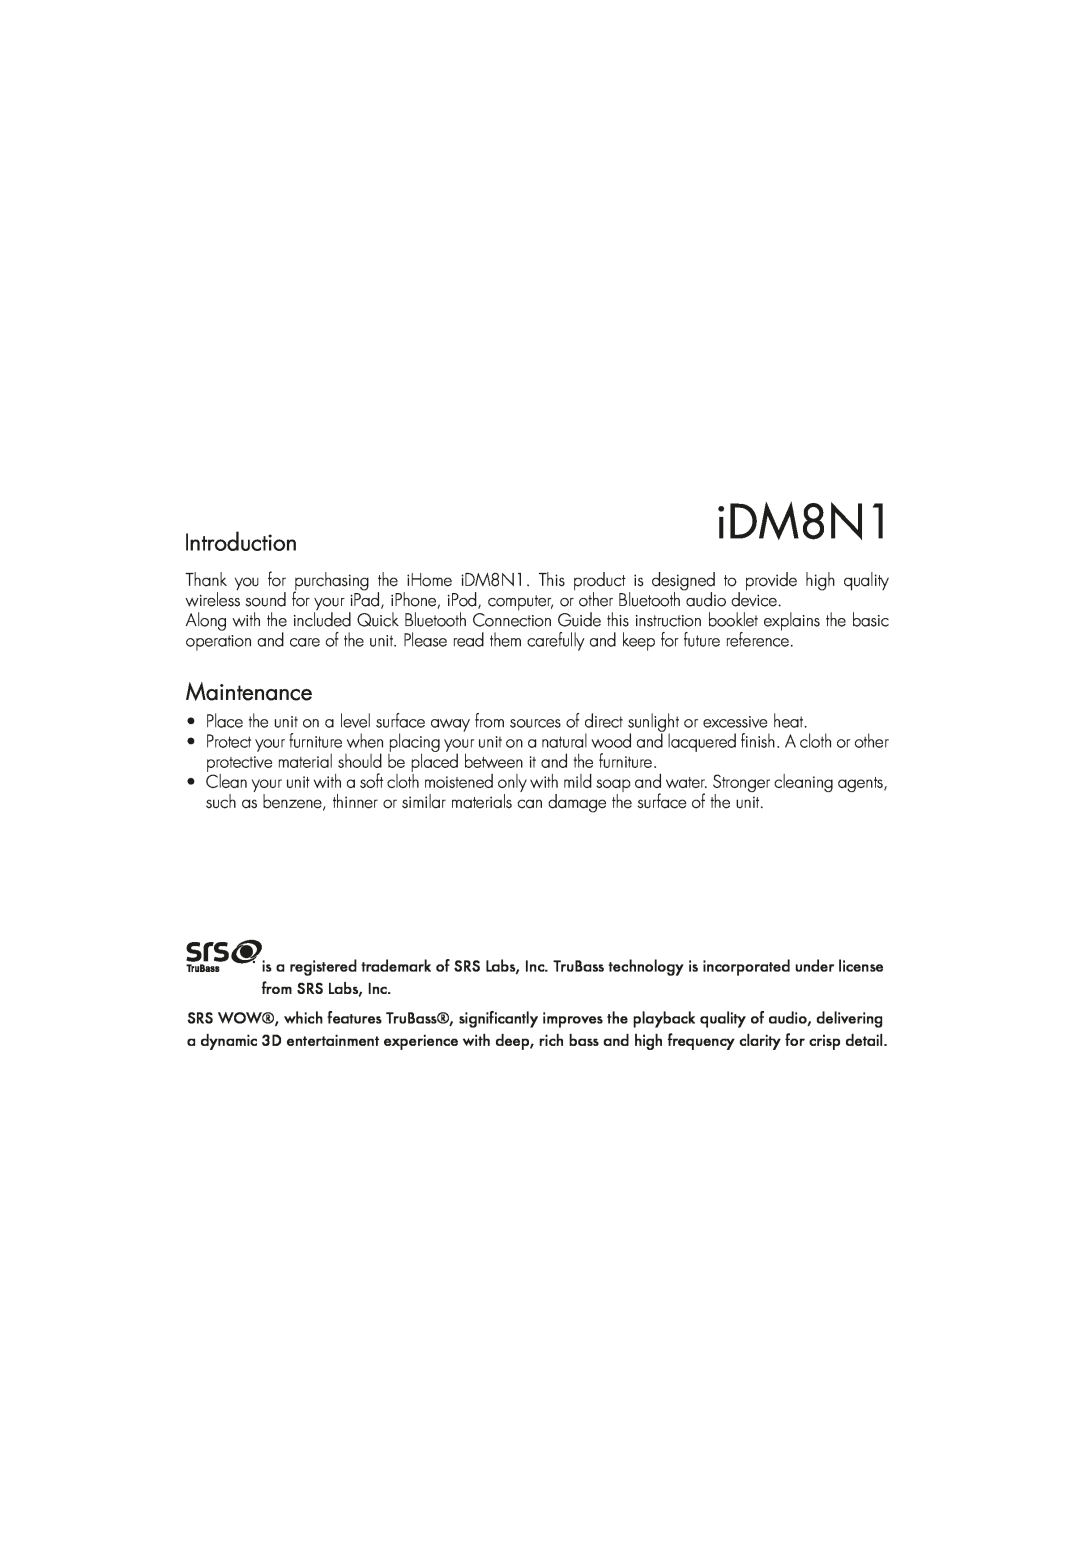 iHome iDM8N1 instruction manual Introduction, Maintenance 